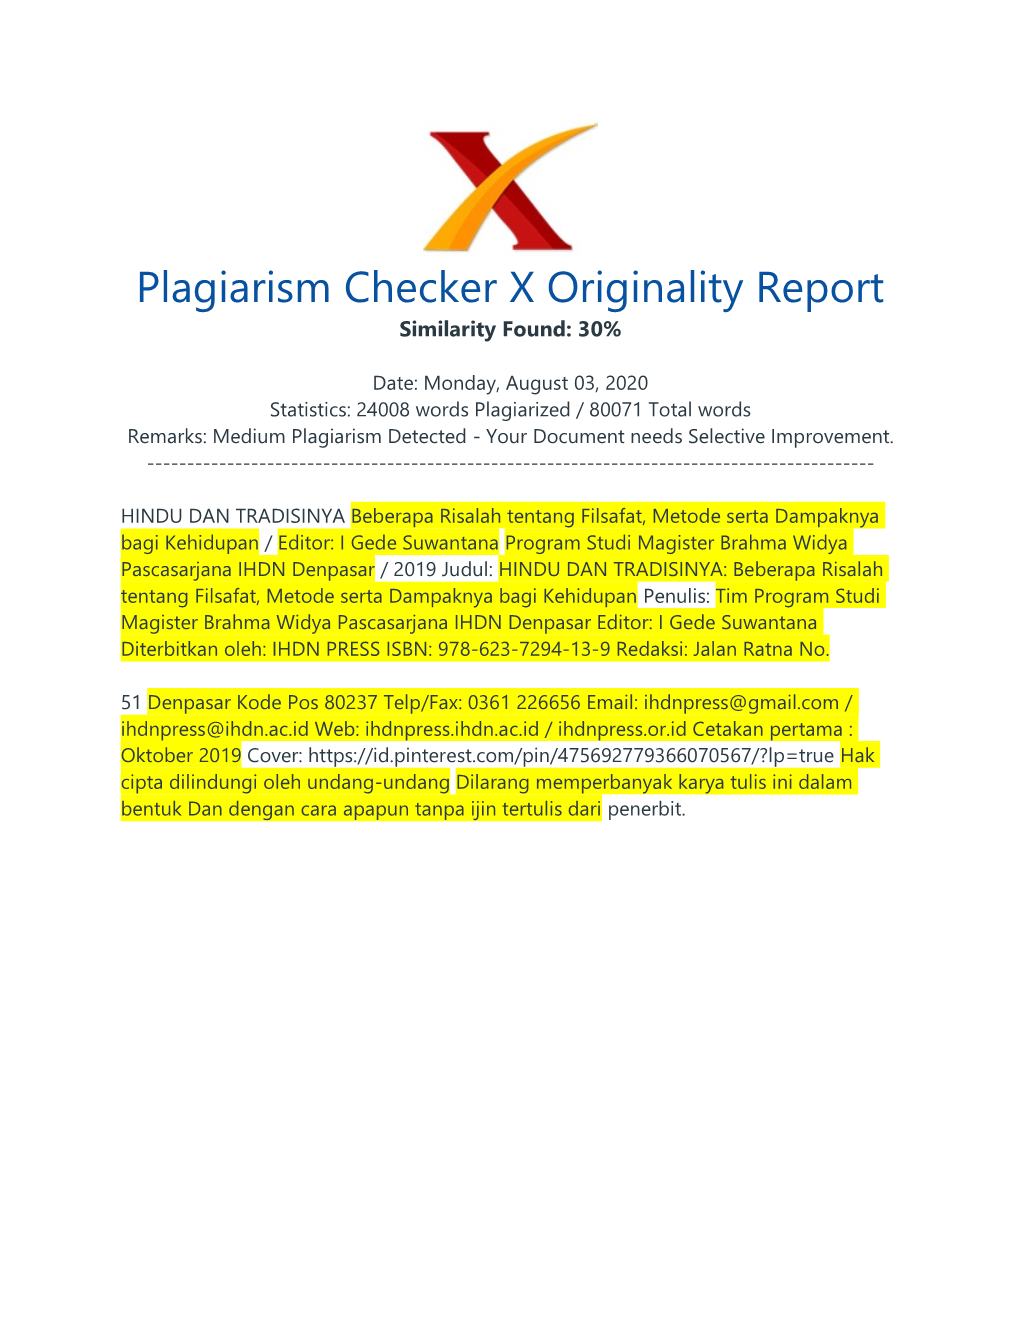 Plagiarism Checker X Originality Report Similarity Found: 30%